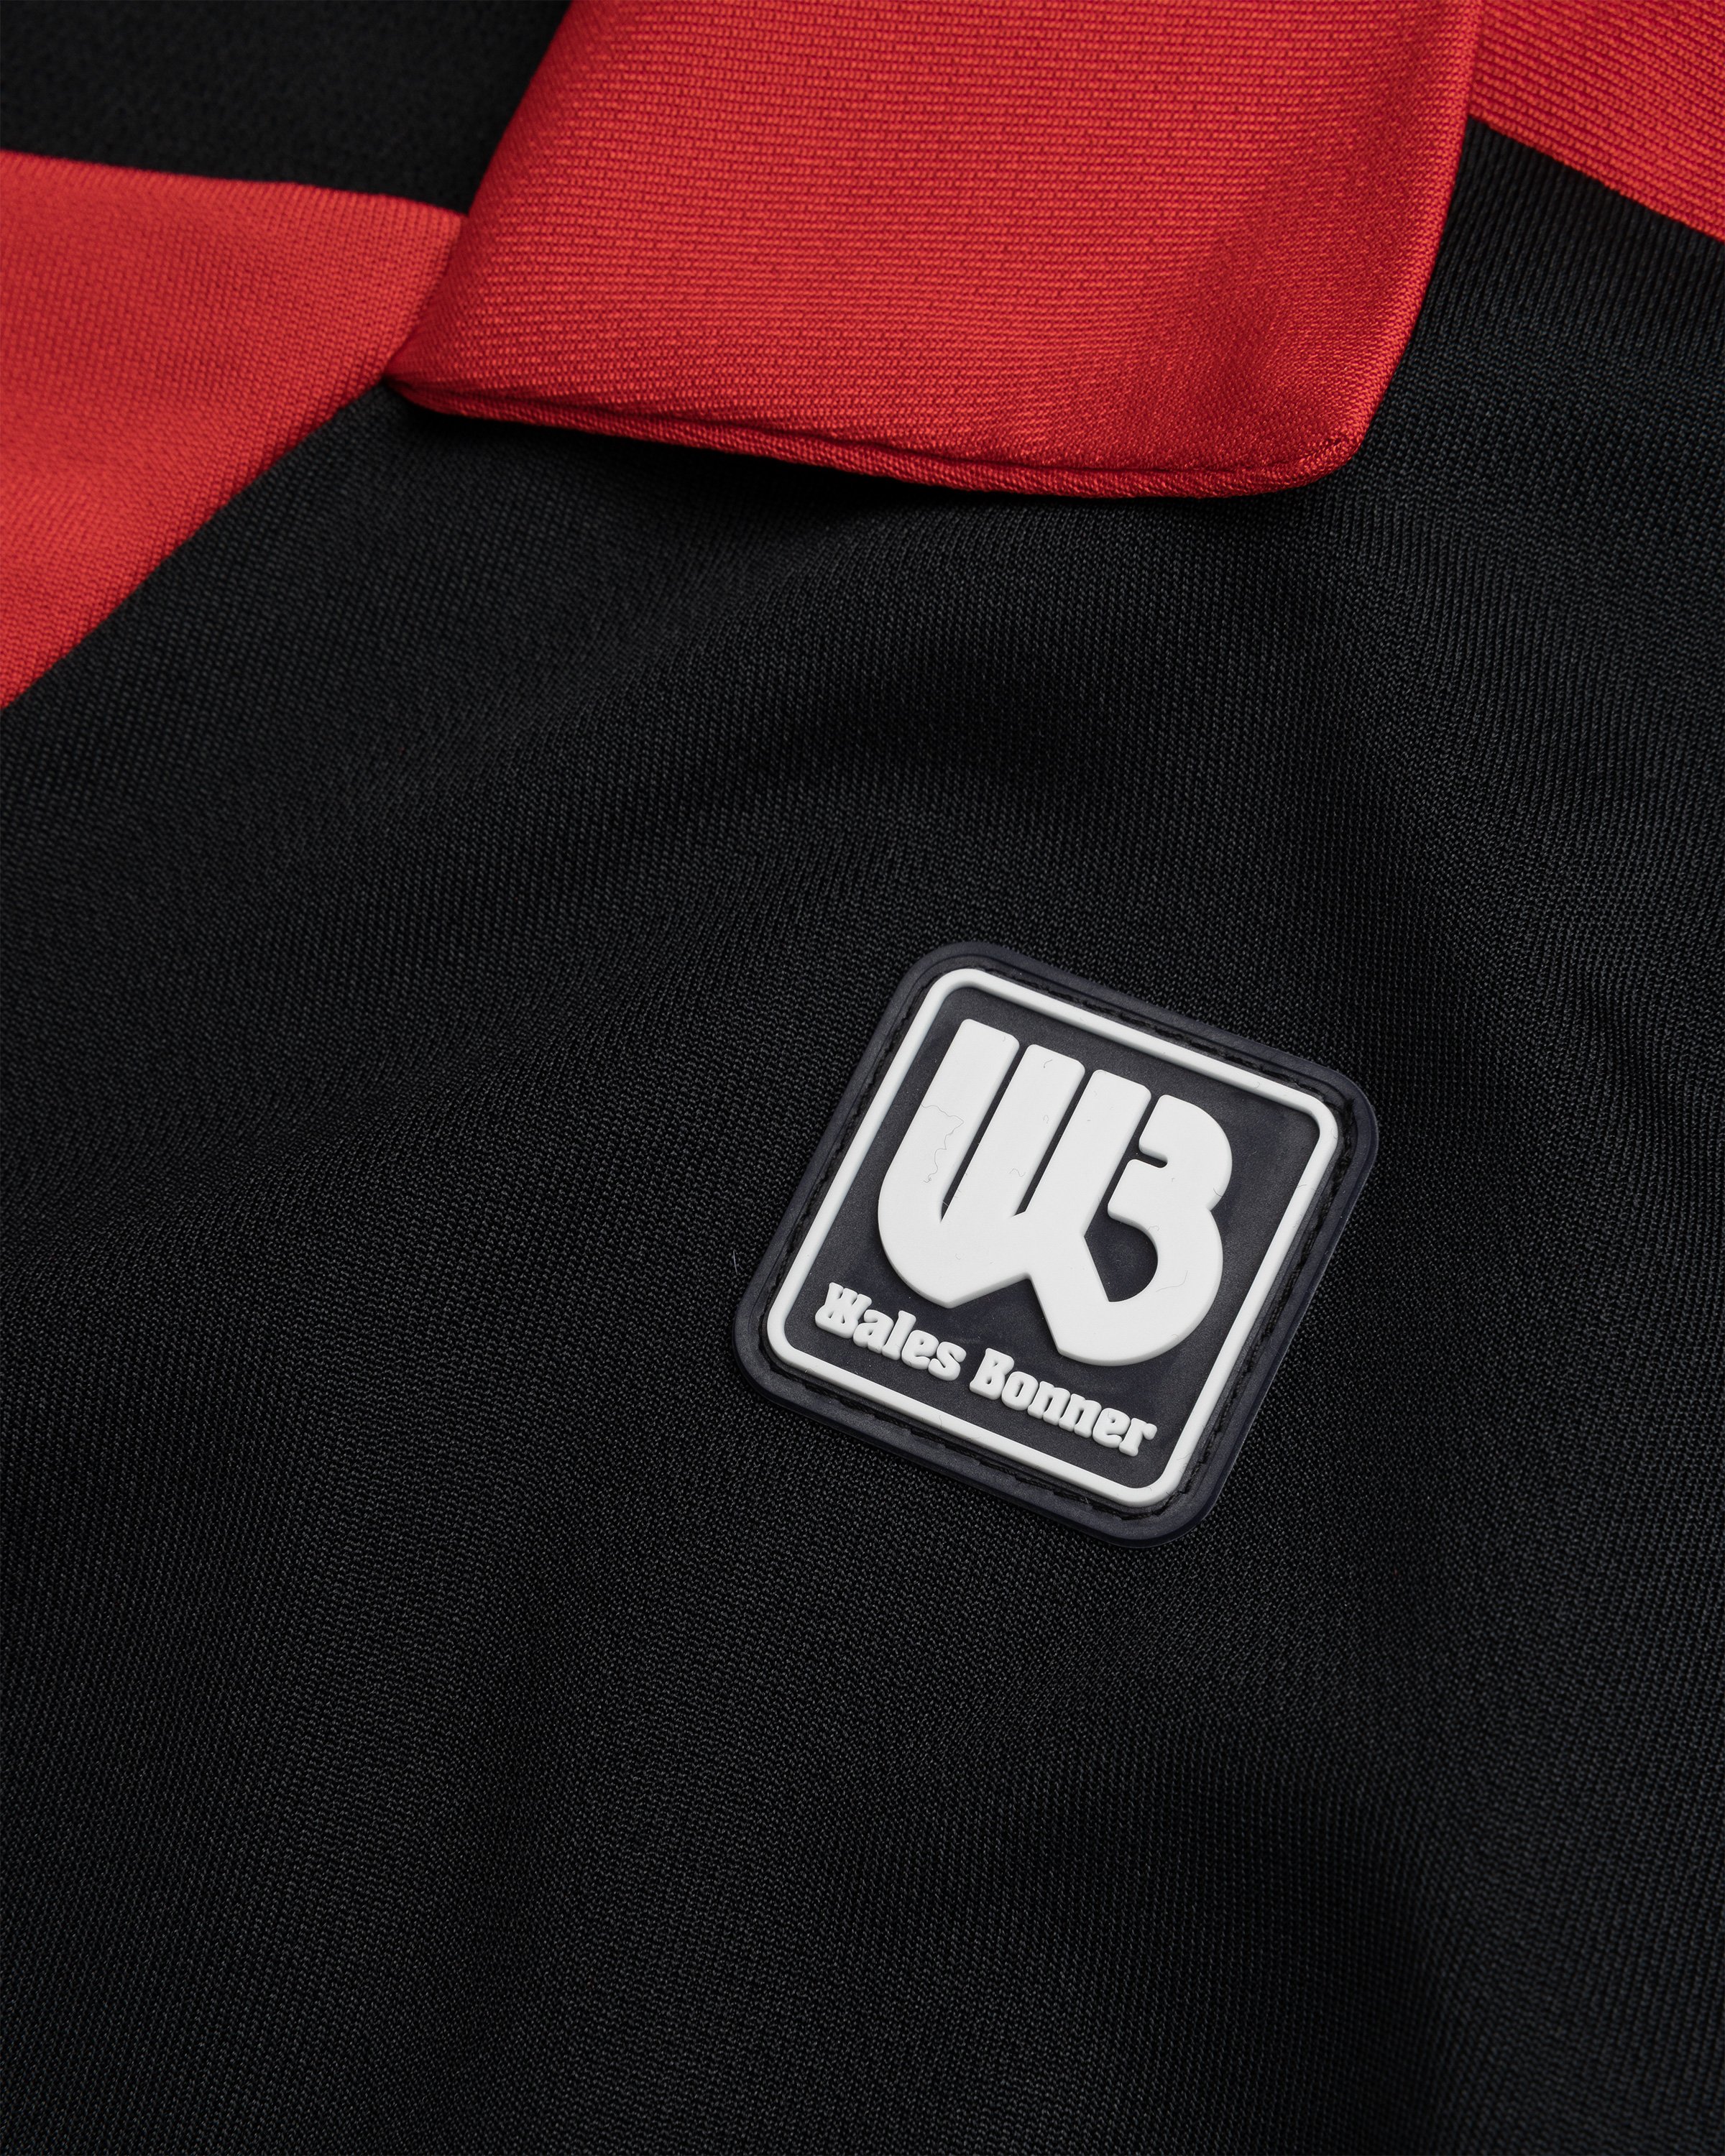 Wales Bonner - Home Jersey Shirt Black/Red - Clothing - Black - Image 7